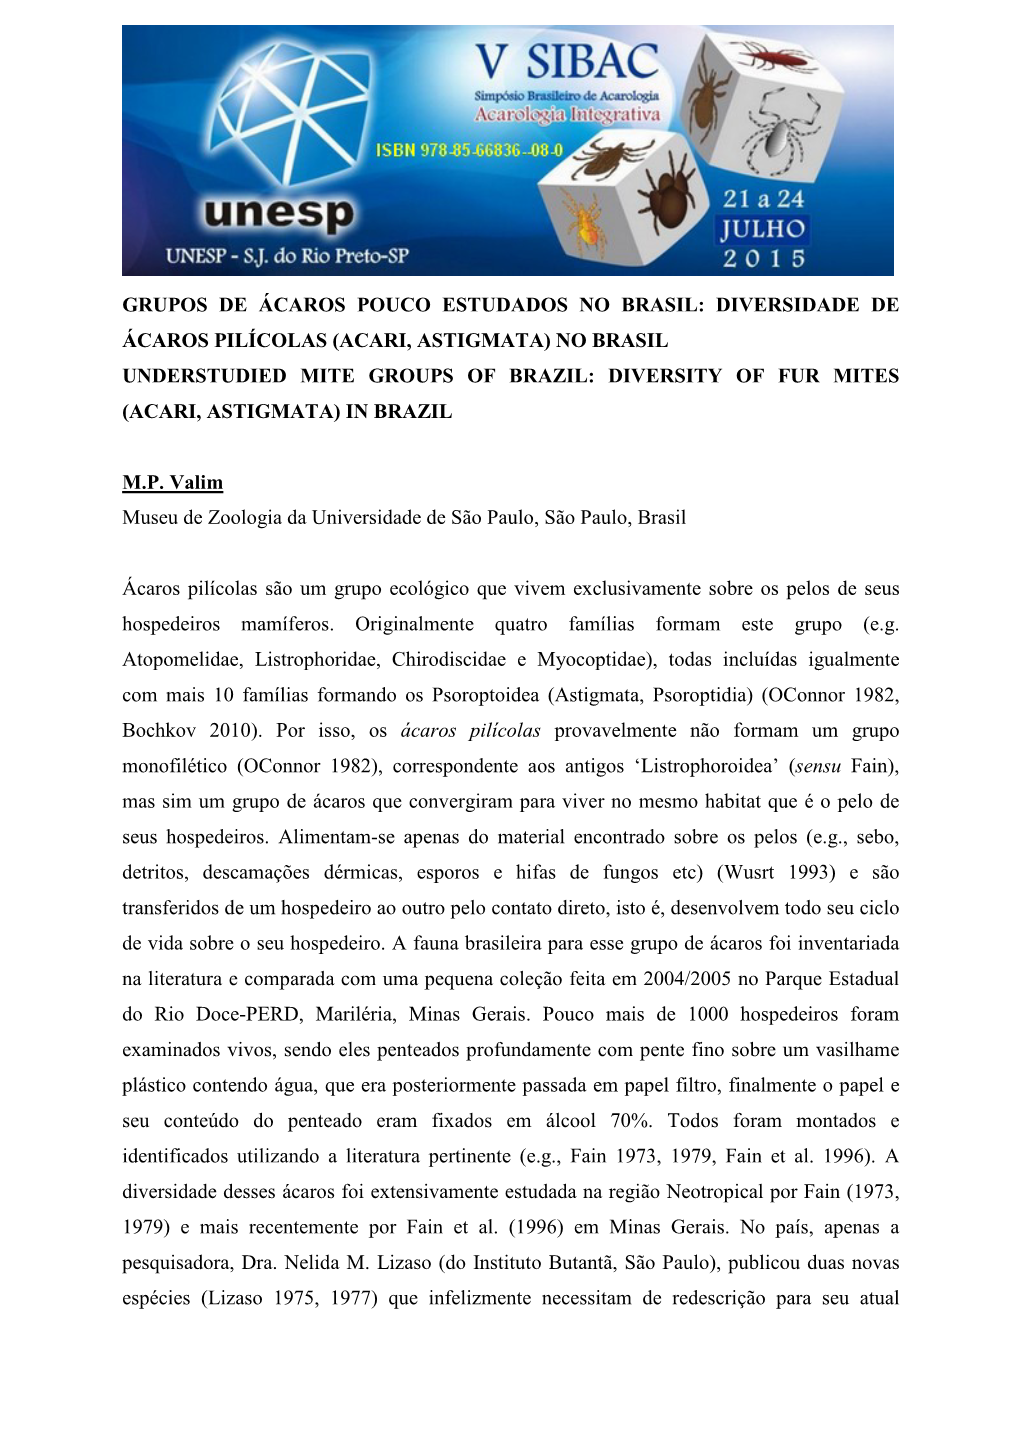 Acari, Astigmata) No Brasil Understudied Mite Groups of Brazil: Diversity of Fur Mites (Acari, Astigmata) in Brazil